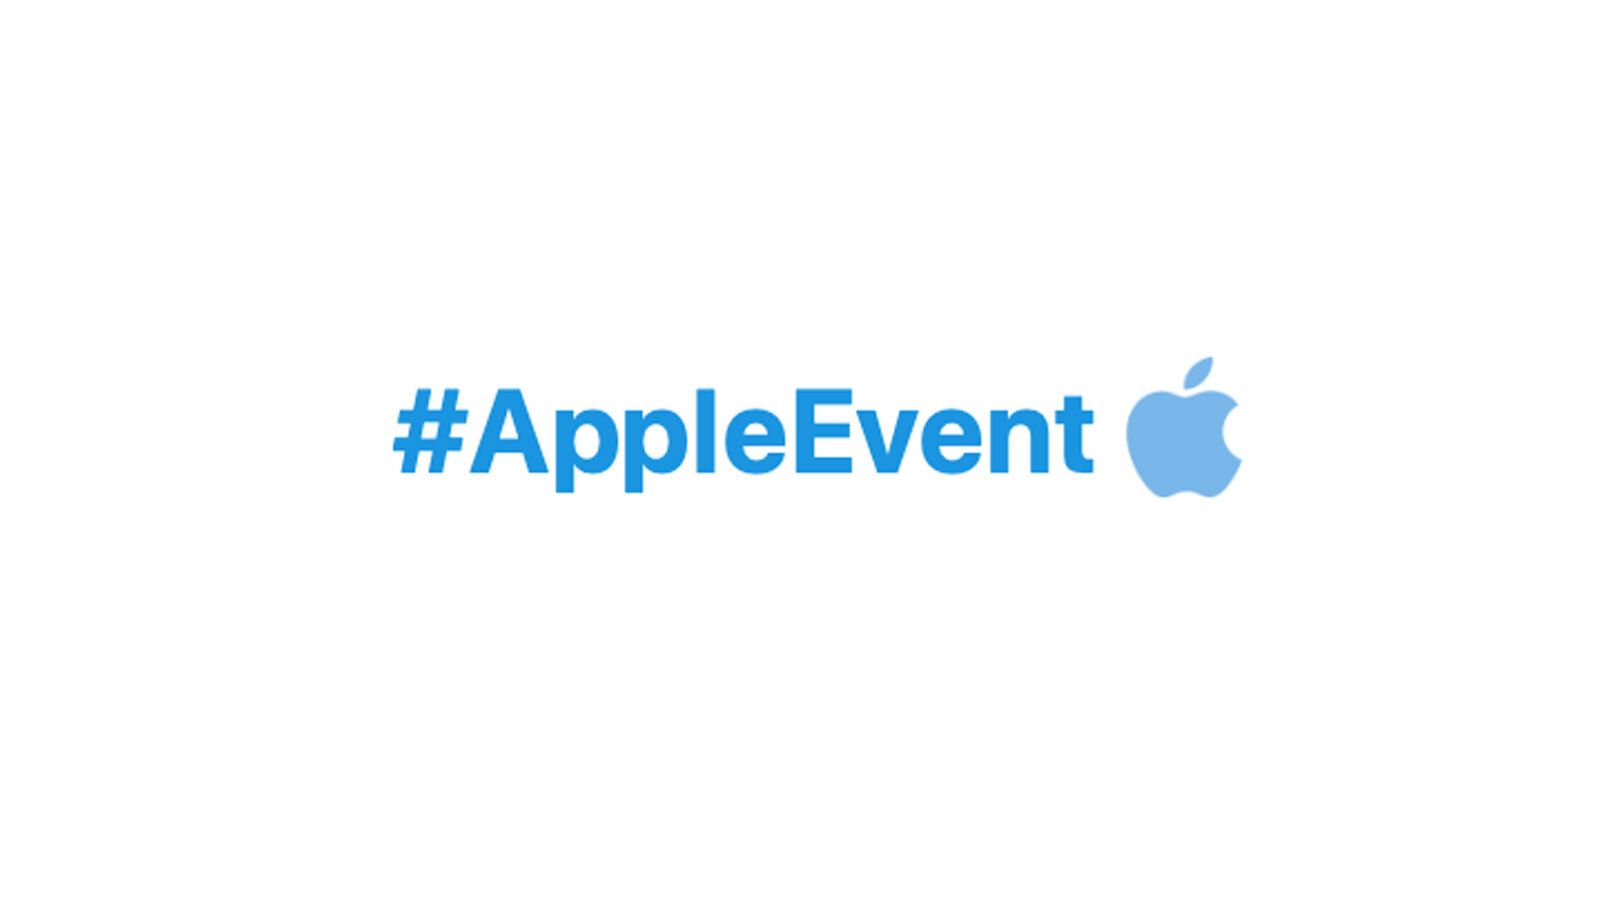 Apple обновила хэшфлаг в Twitter в преддверии осеннего мероприятия 7 сентября